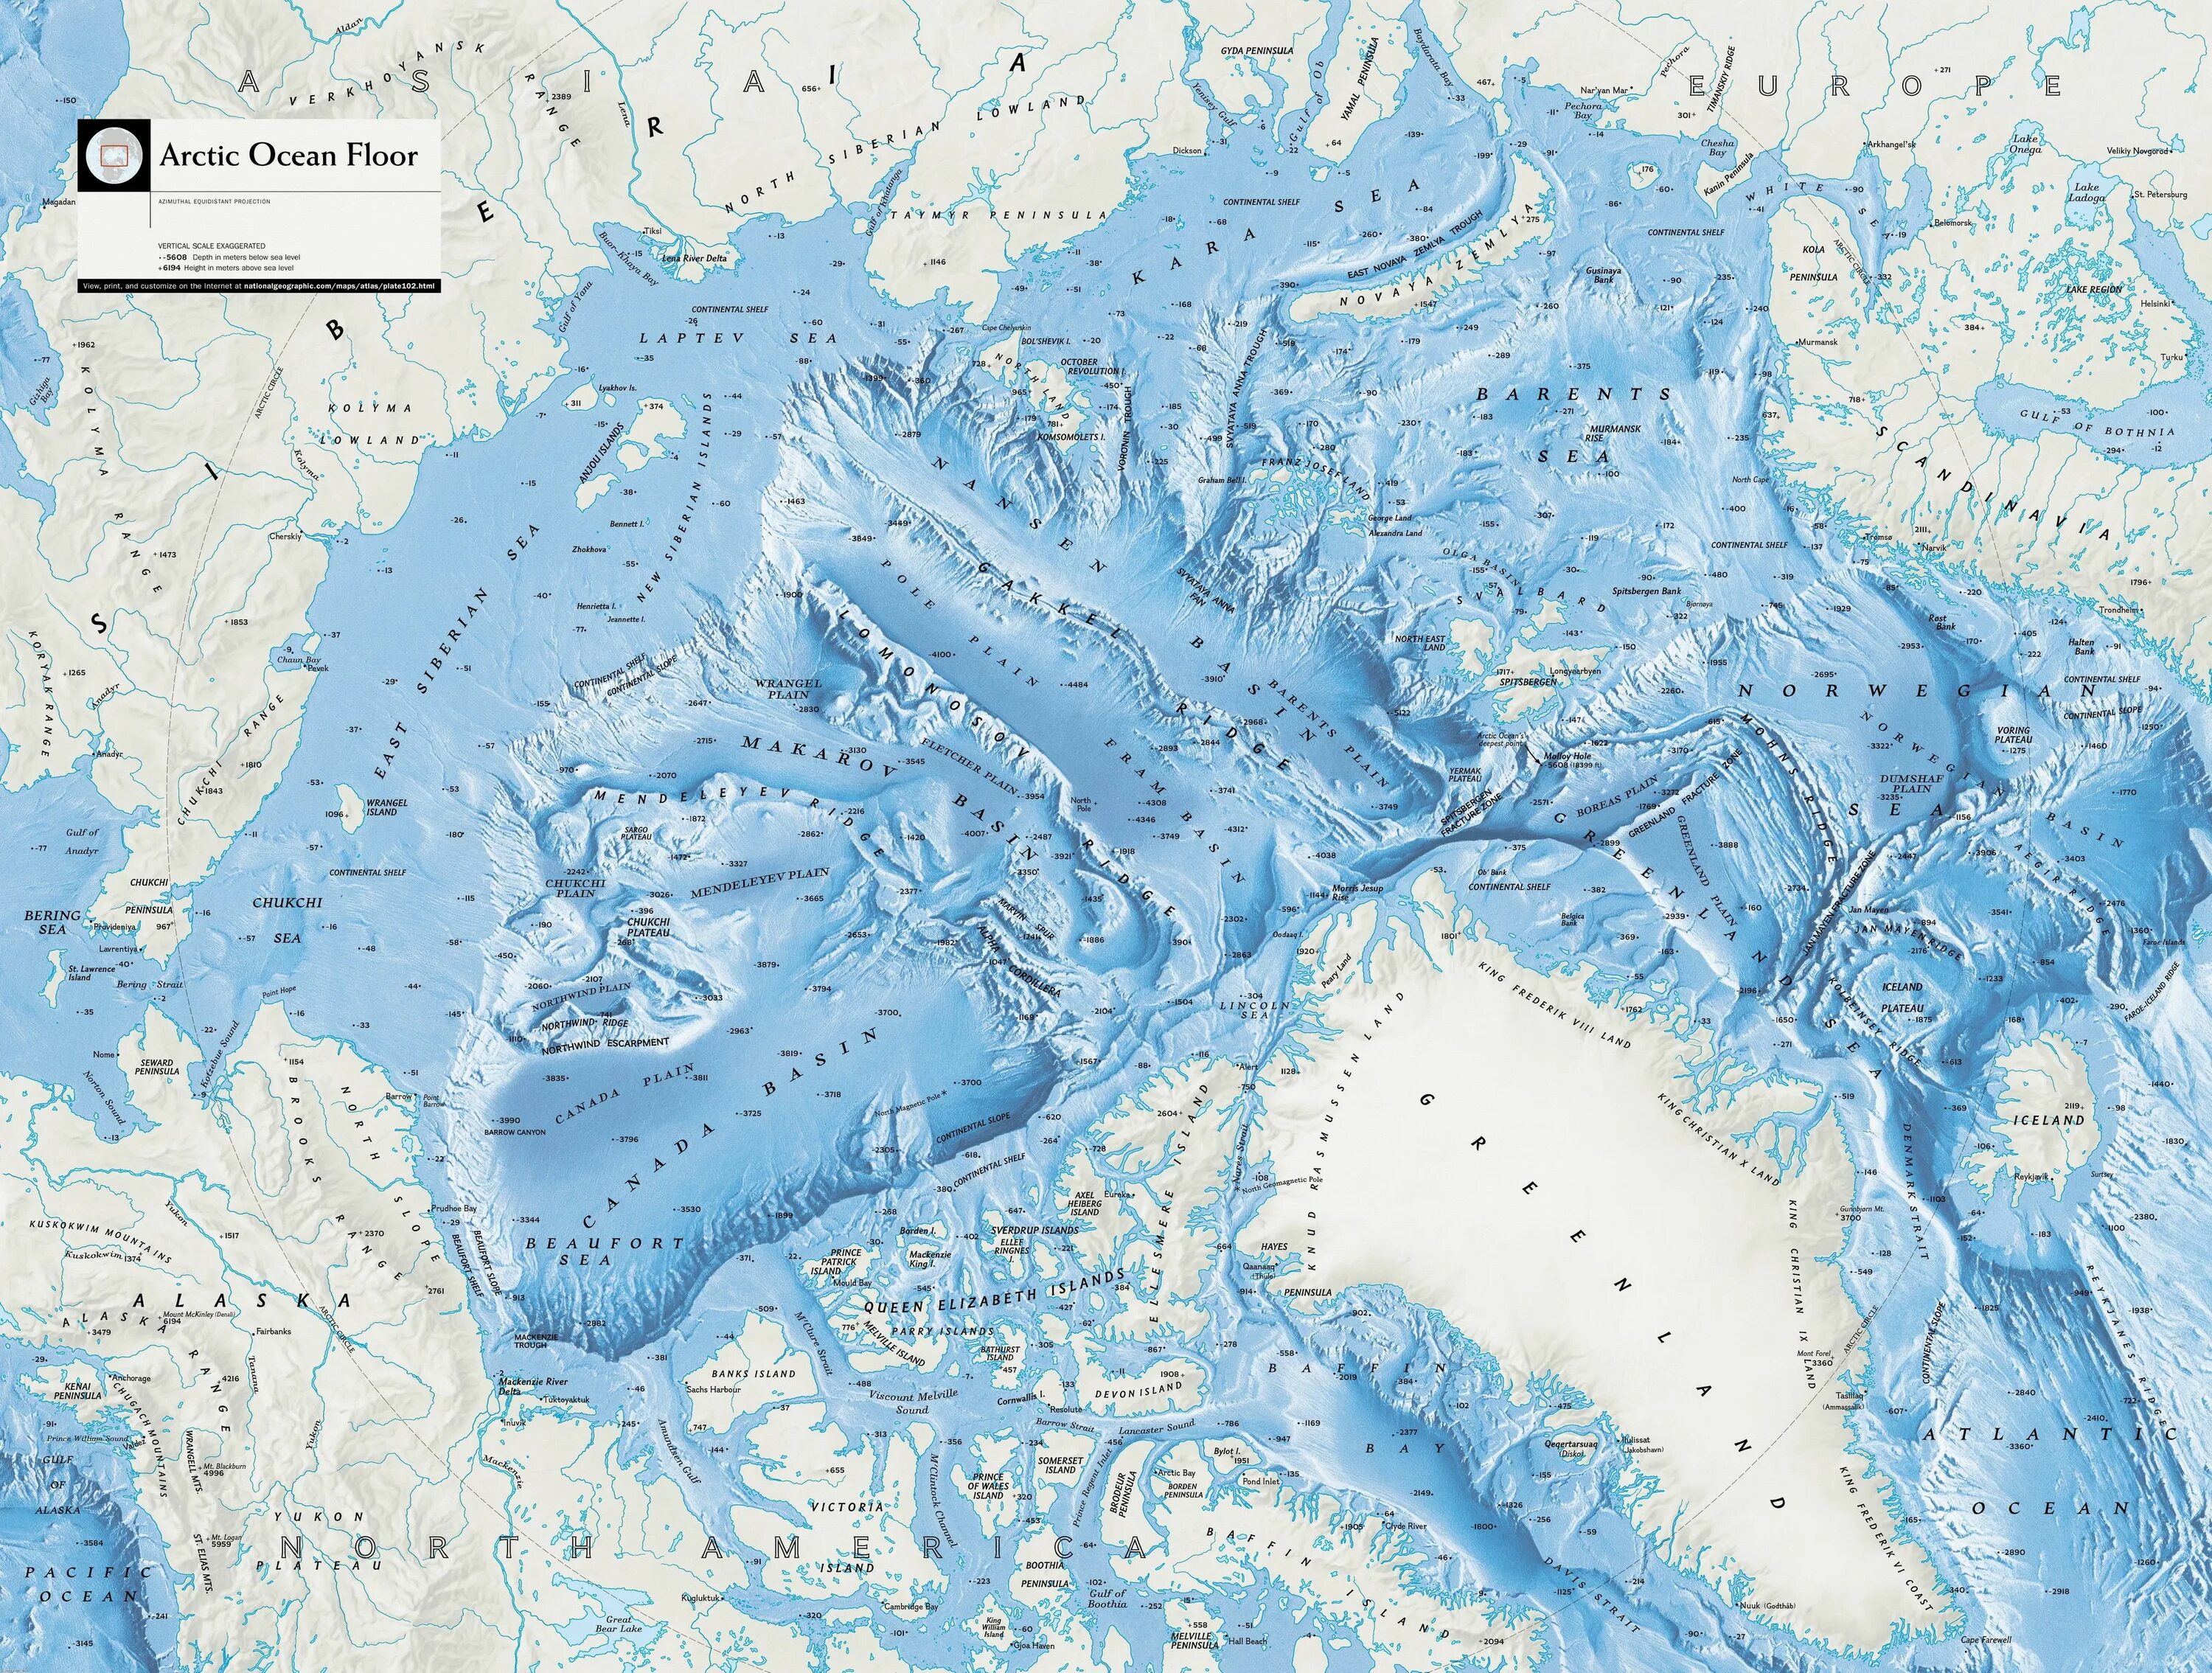 Карта дна Северного Ледовитого океана. Рельеф дна Северного Ледовитого океана. Северный Ледовитый океан на карте. Карта глубин Северного Ледовитого океана.